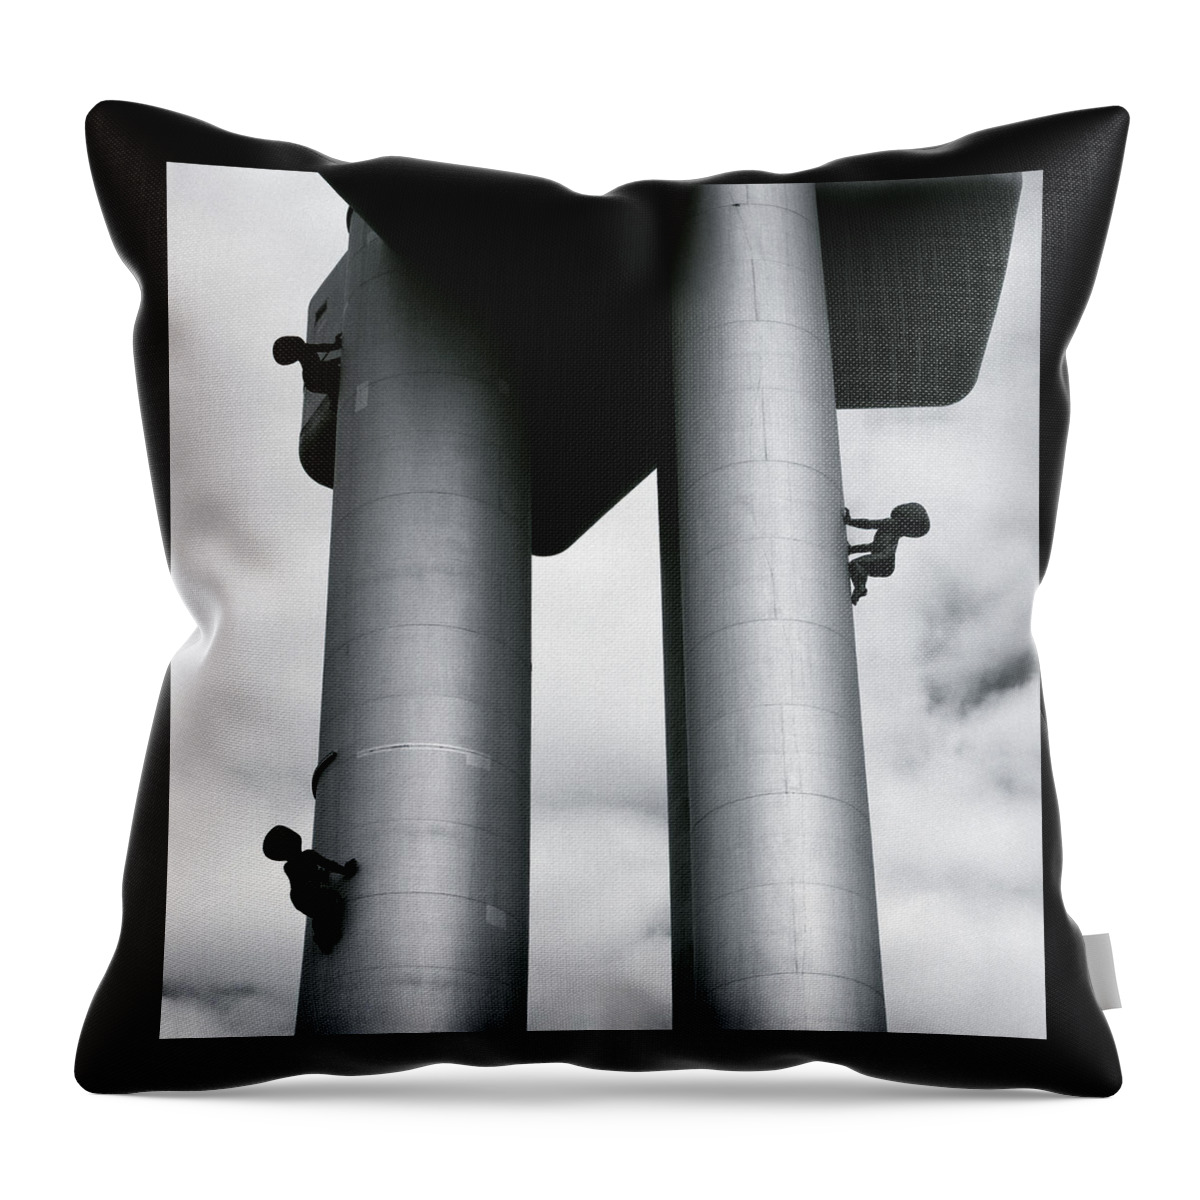 Art Throw Pillow featuring the photograph Surrealist Art by Shaun Higson